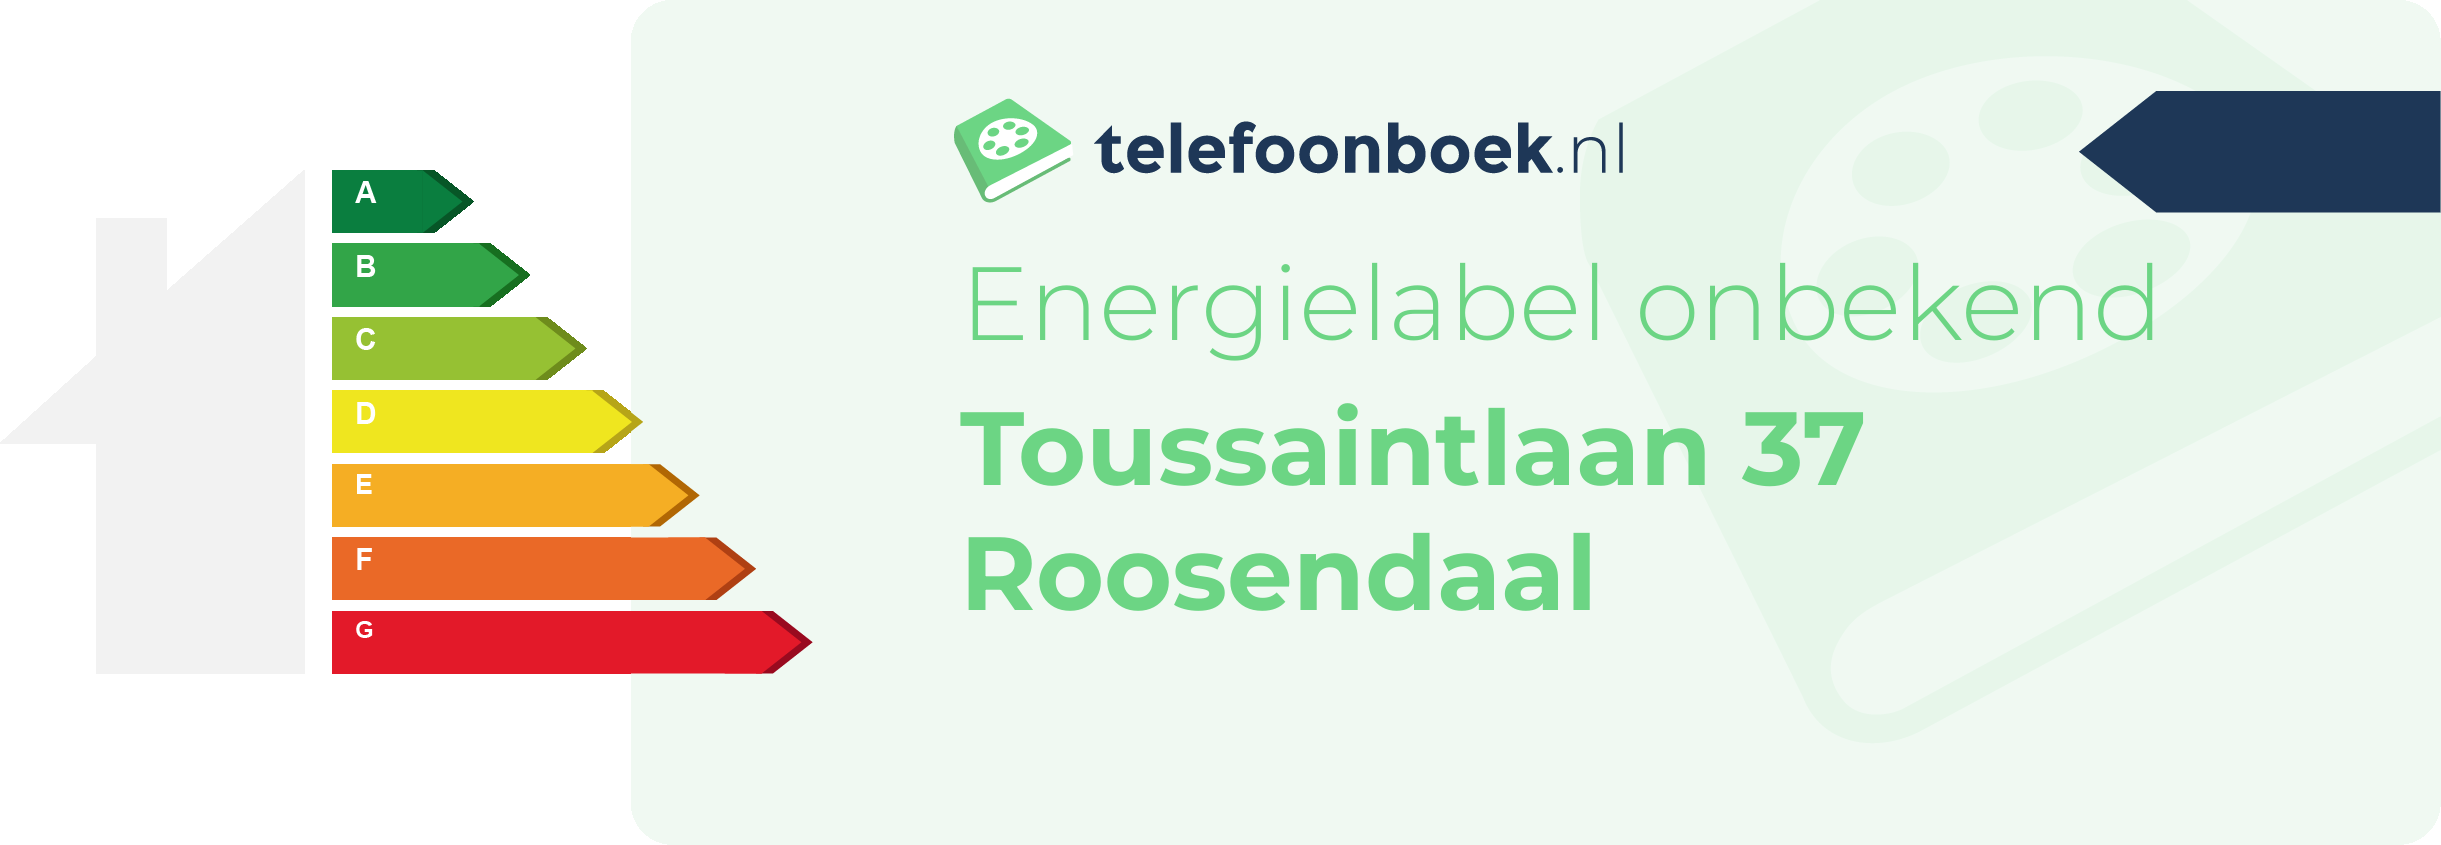 Energielabel Toussaintlaan 37 Roosendaal